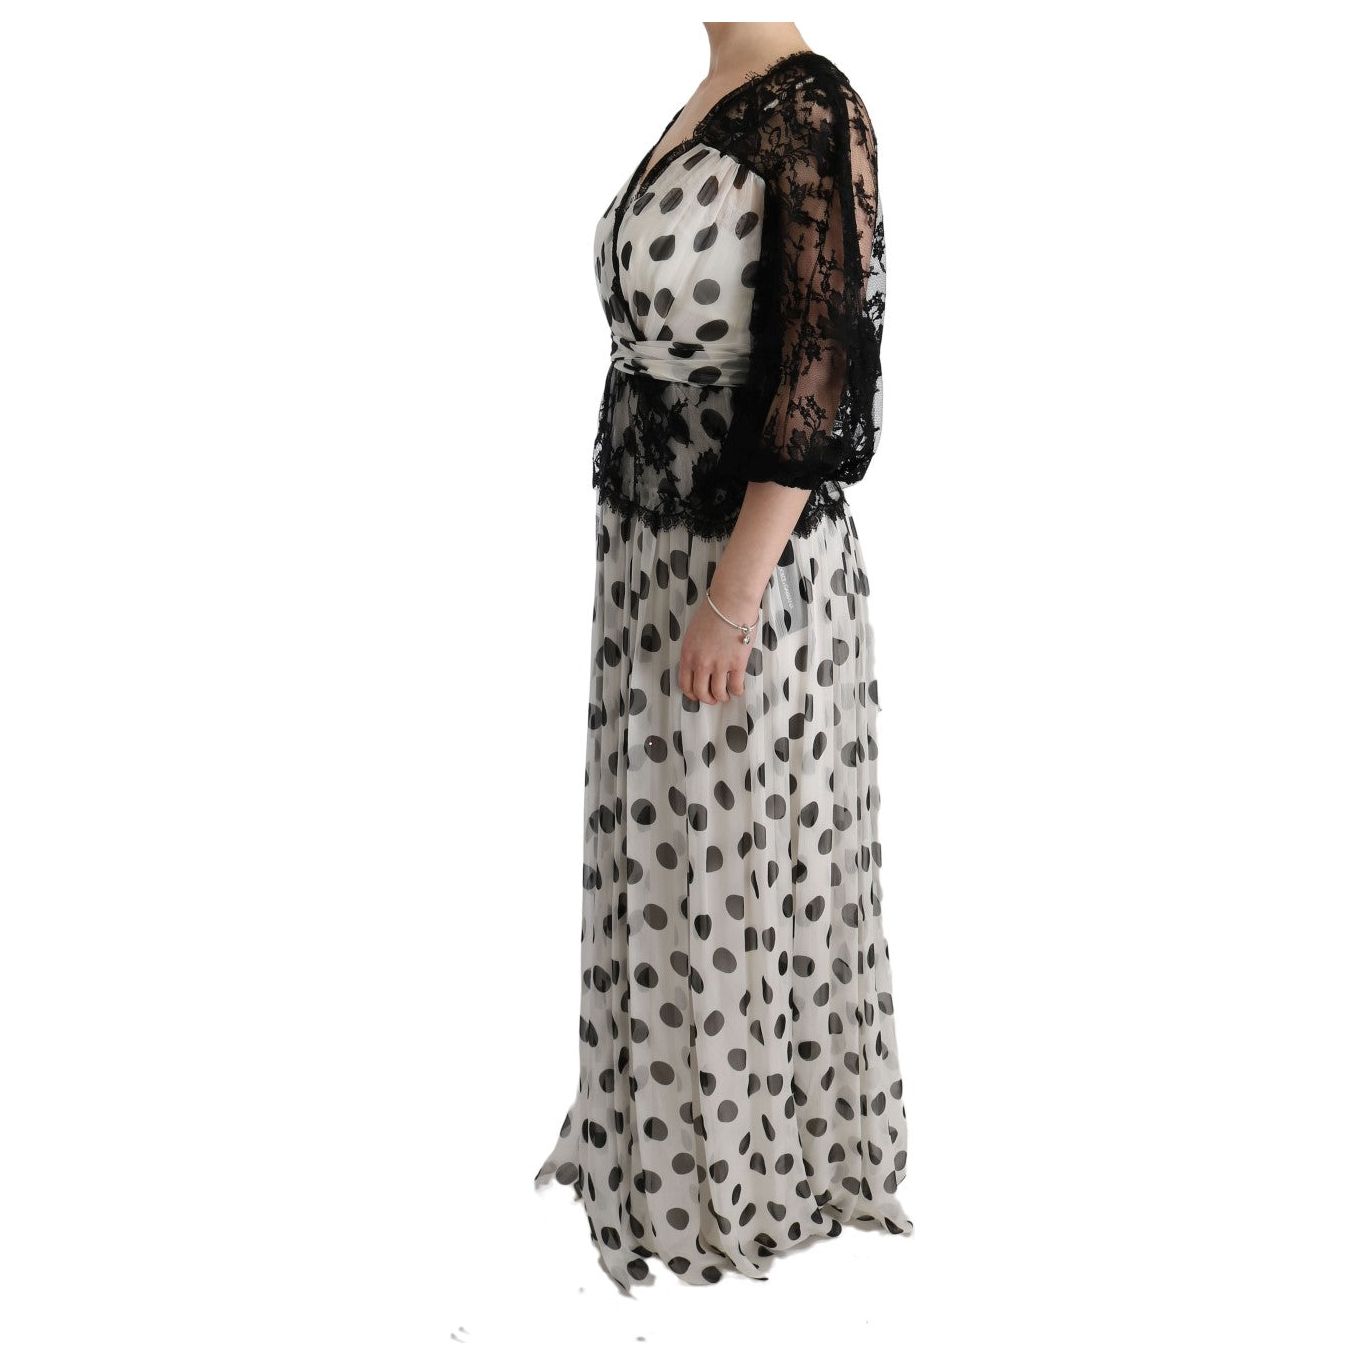 Dolce & Gabbana Elegant Polka Dotted Full Length Gown black-white-polka-dotted-floral-dress 445584-black-white-polka-dotted-floral-dress-1.jpg